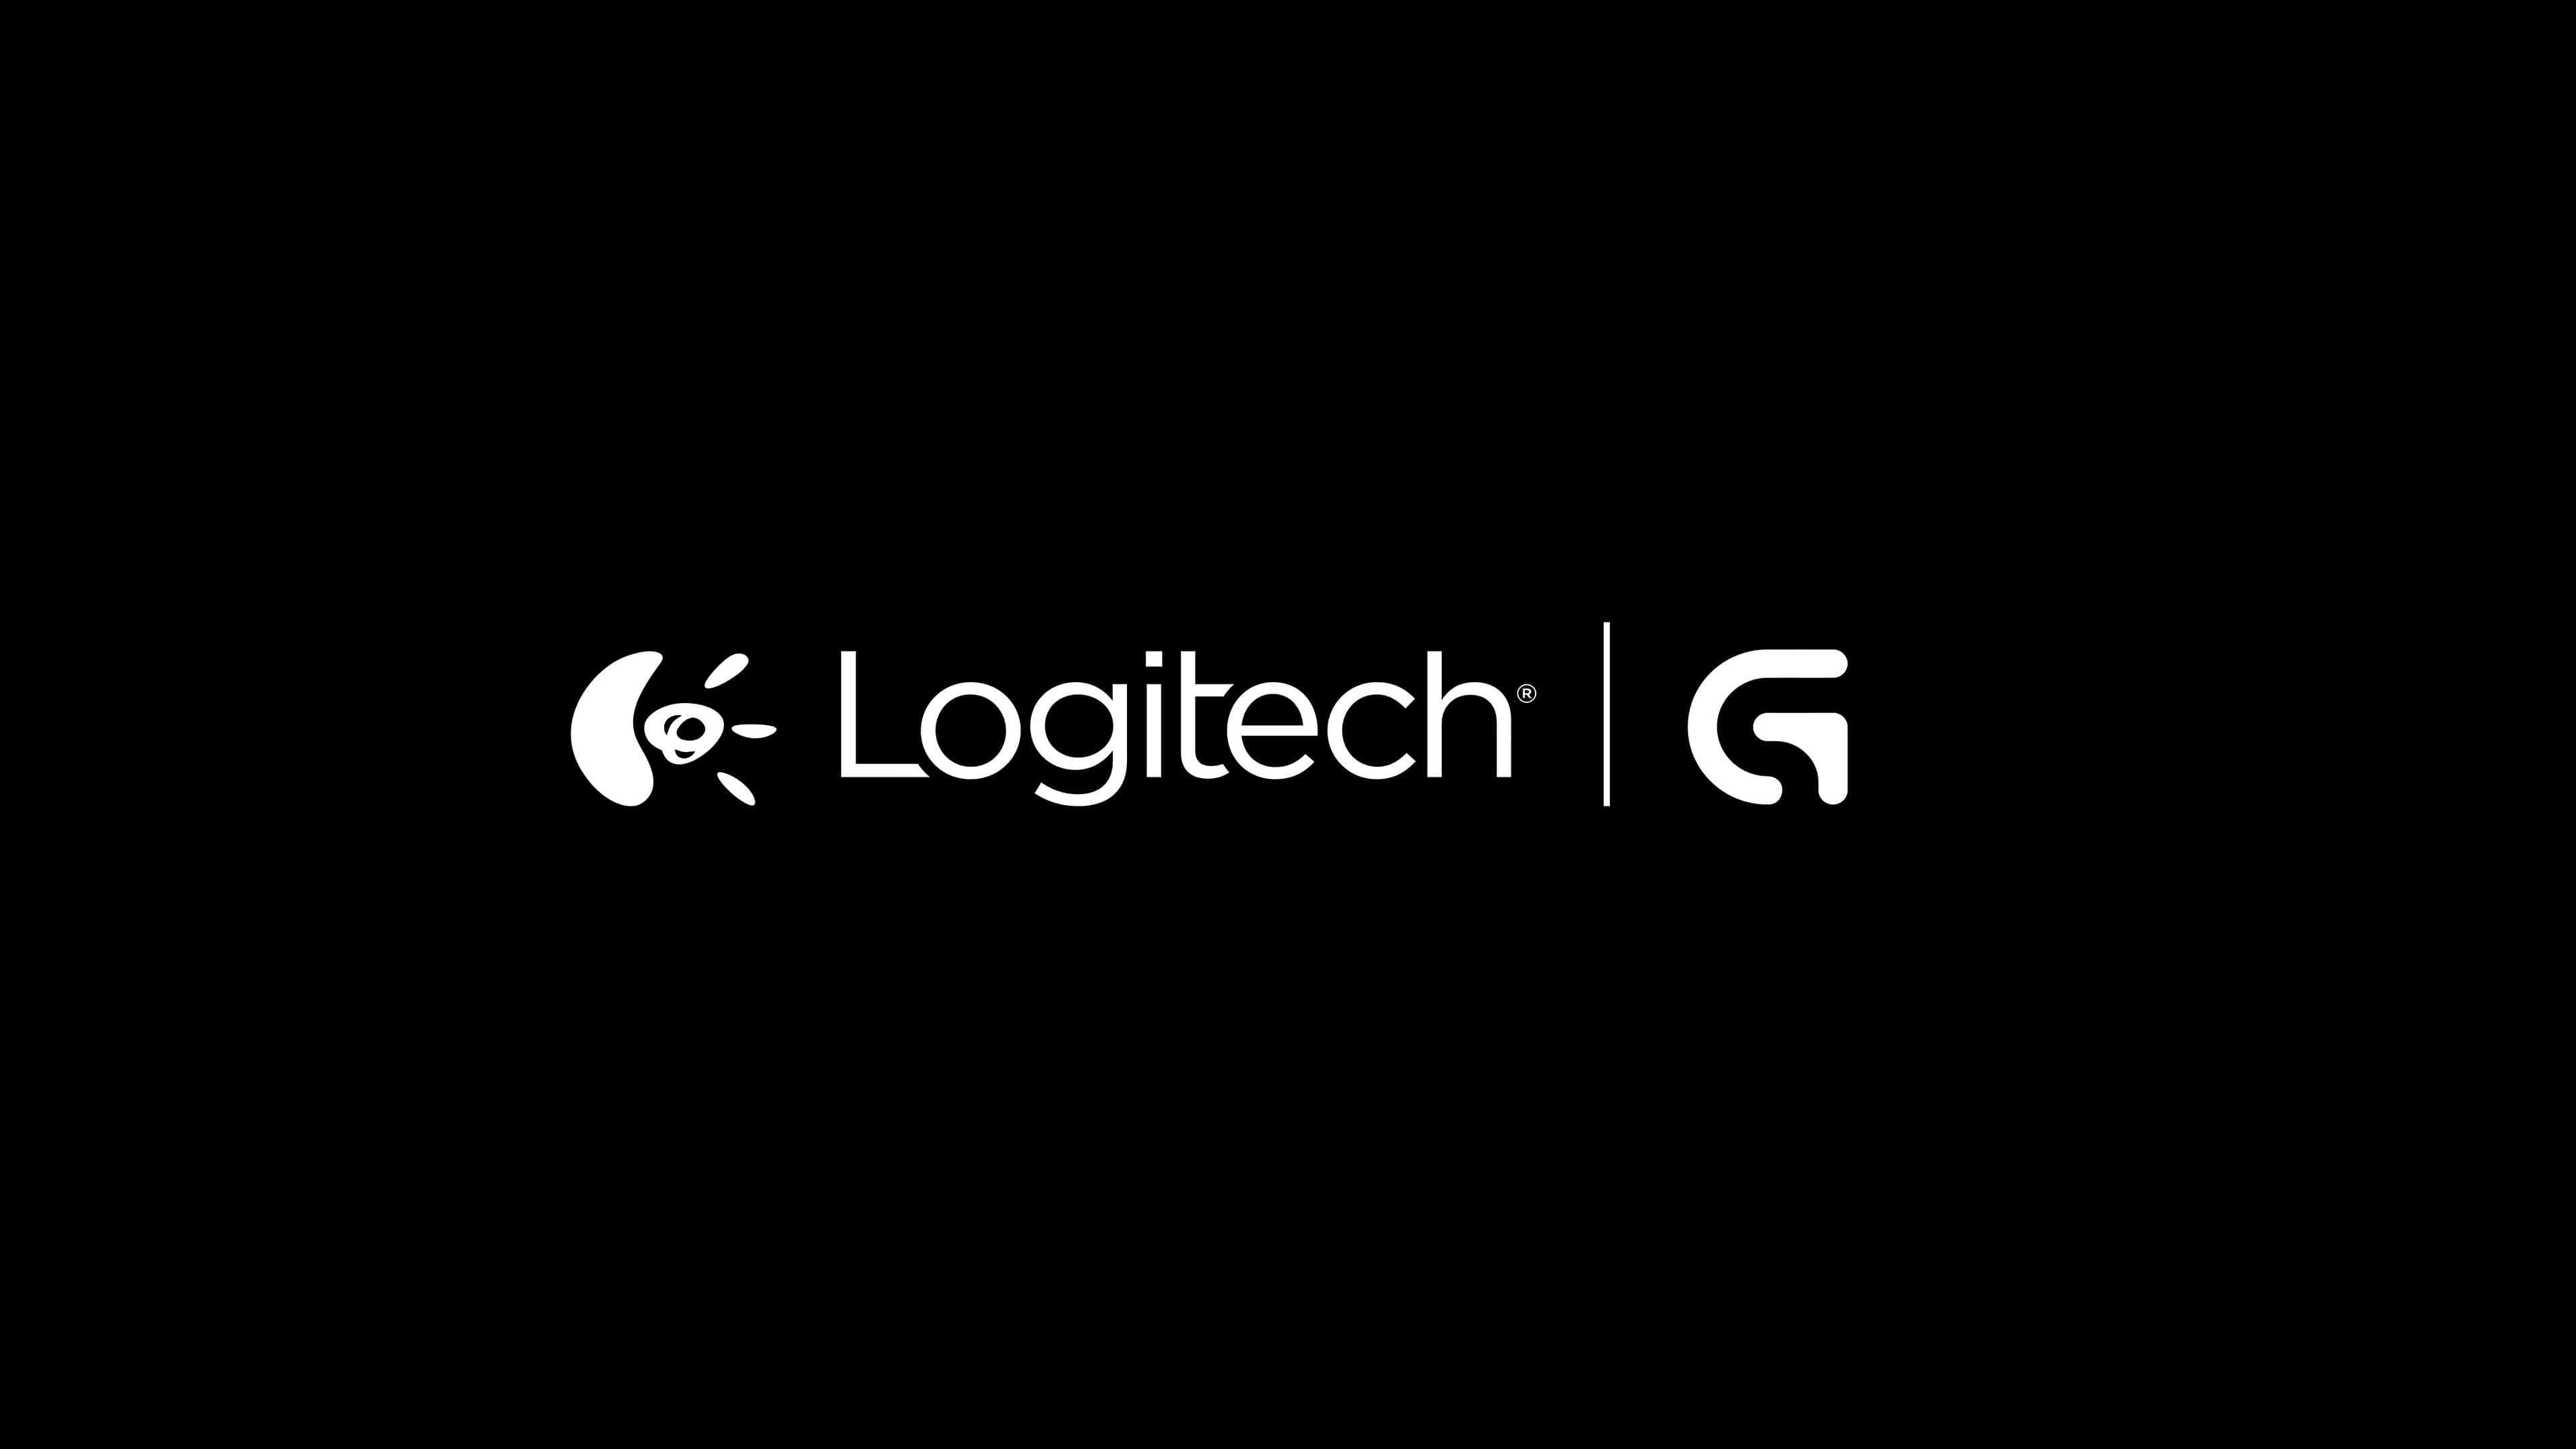 Logitech 4K Wallpapers